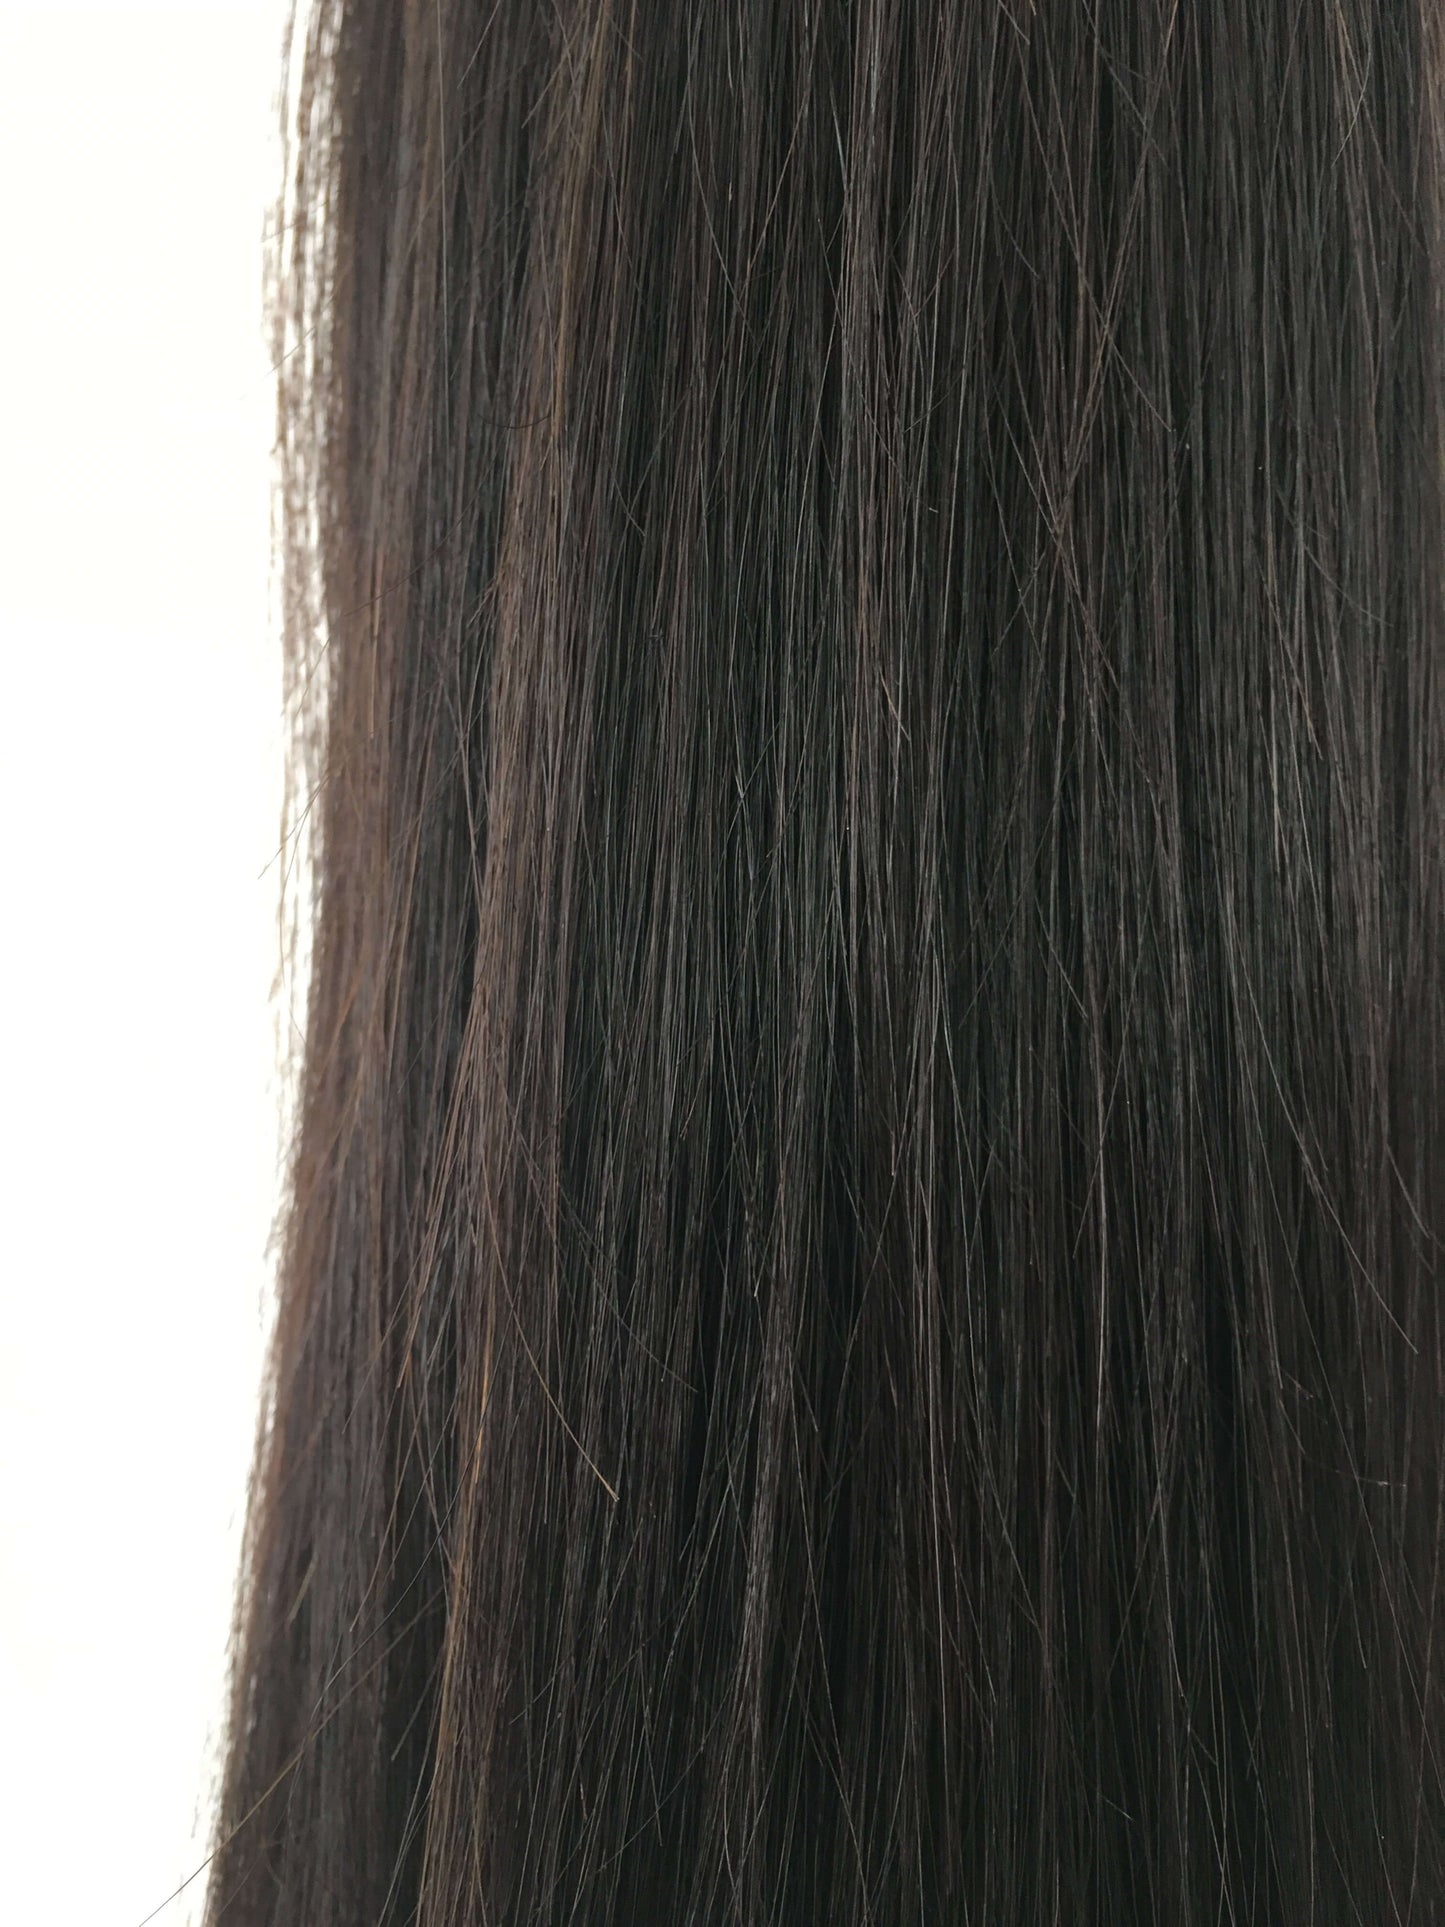 Brazilian Virgin Remy Human Hair - Inslag, 14'', Rak, Virgin, 100 g - Snabb leverans